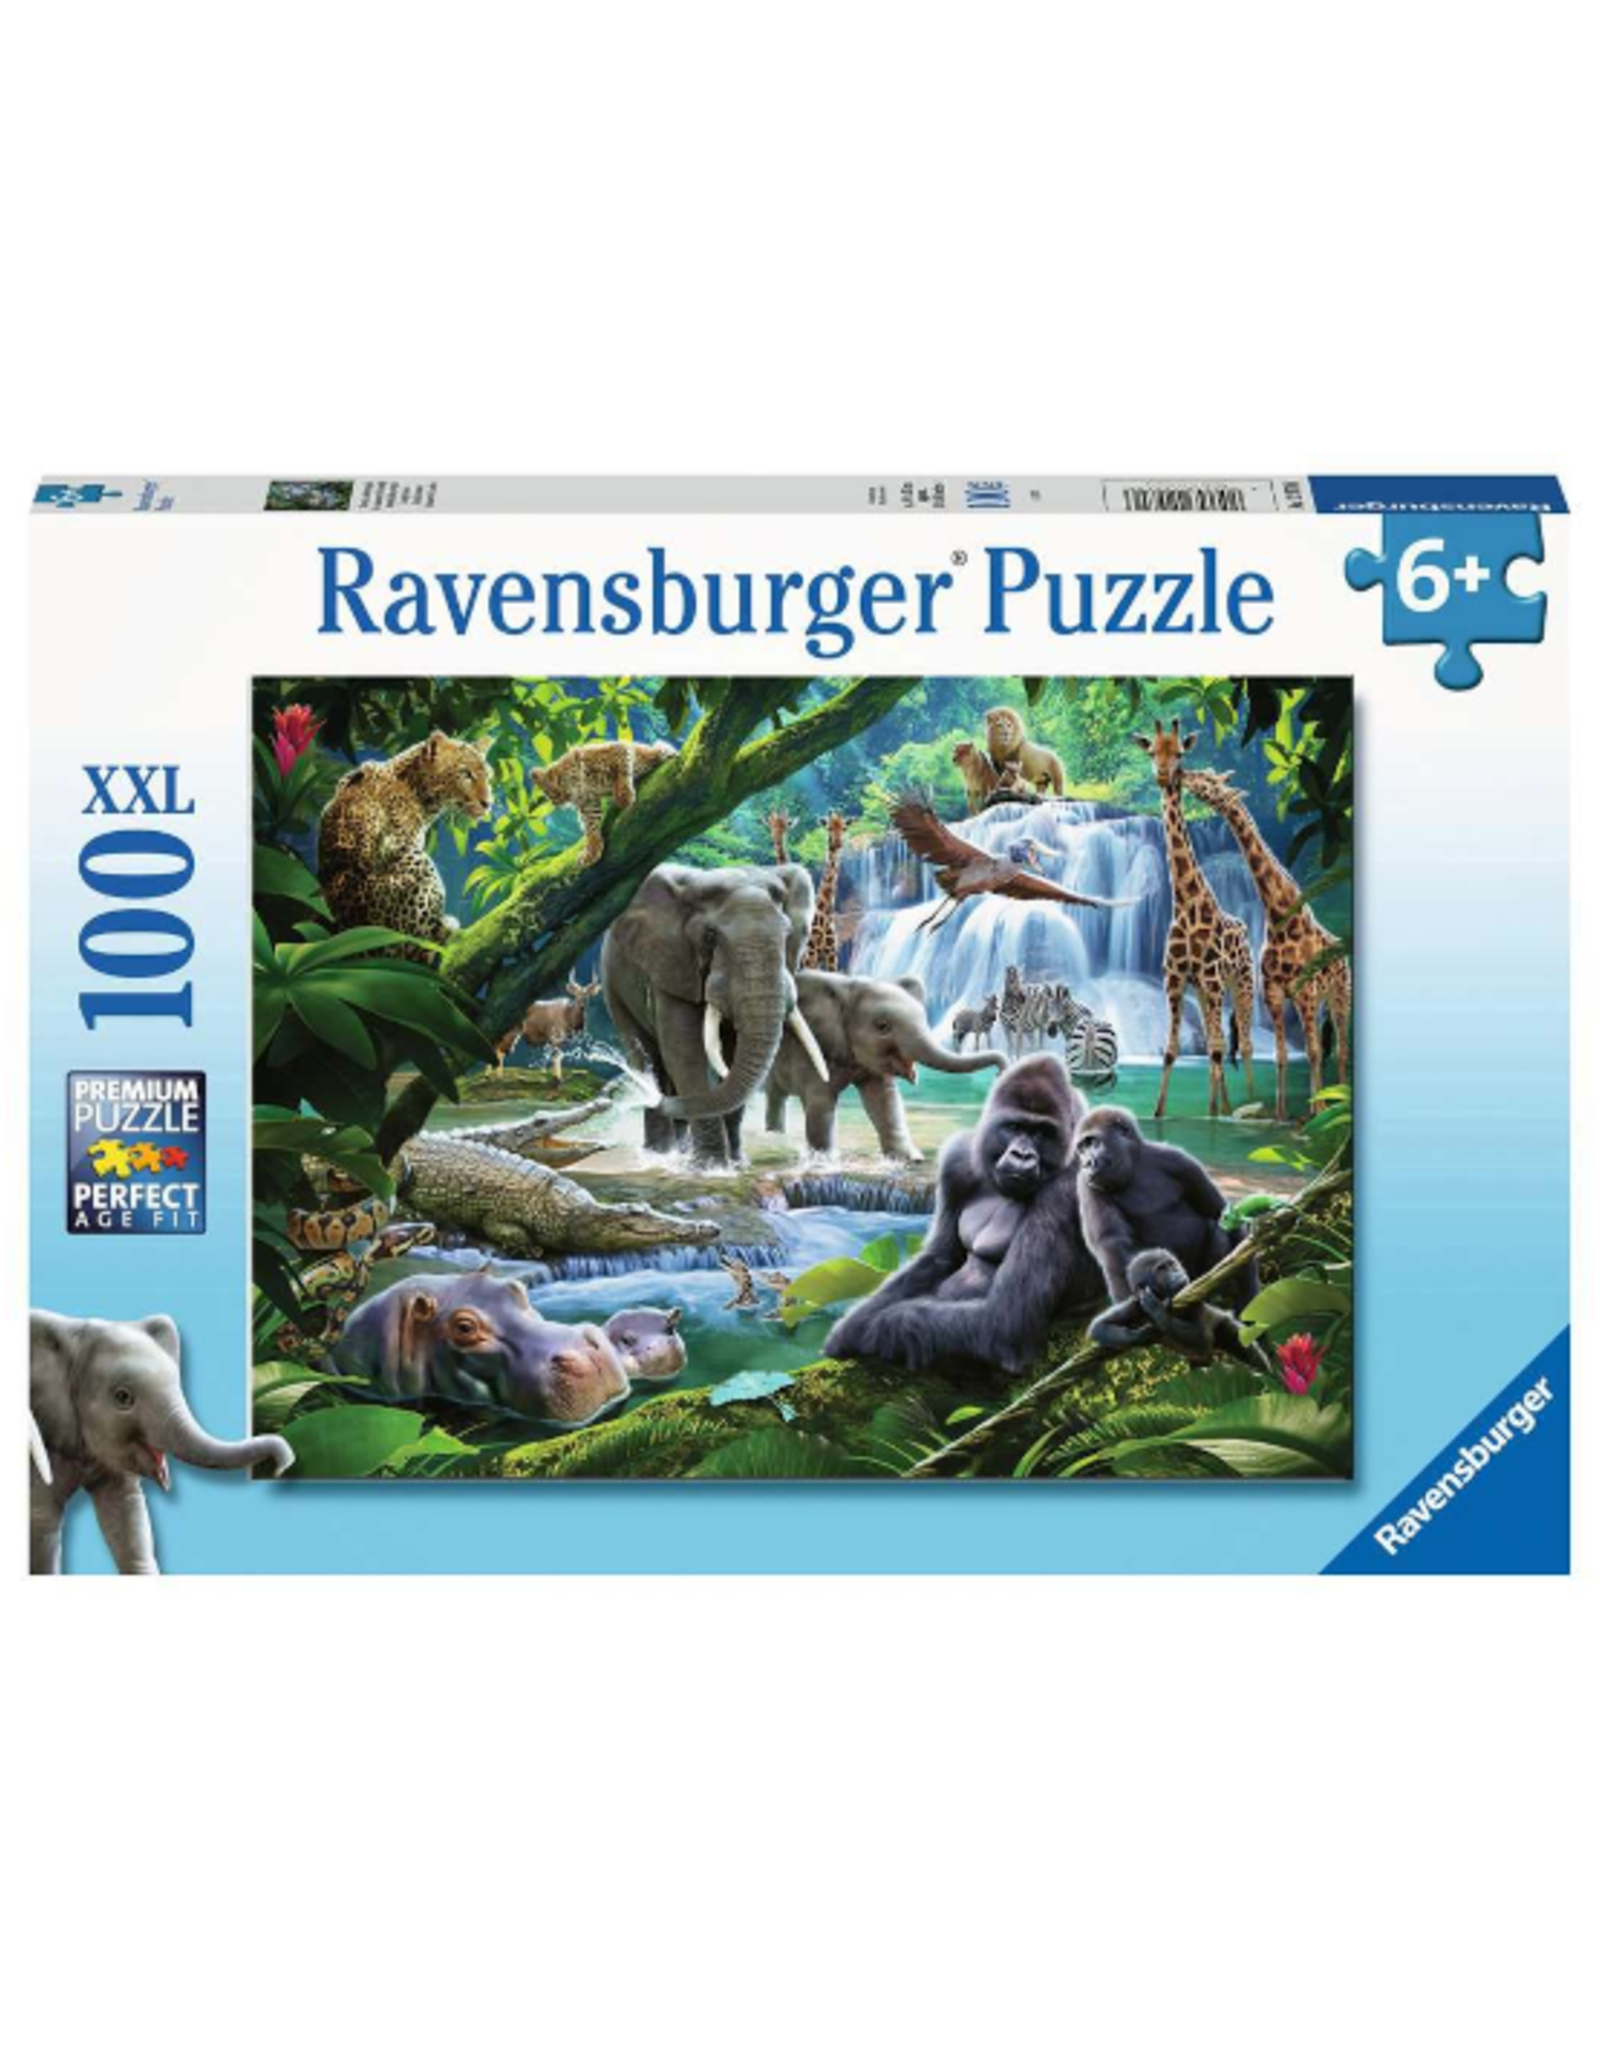 Ravensburger Ravensburger - 6+ - 100pcs - Jungle Animals (Jungle Families)